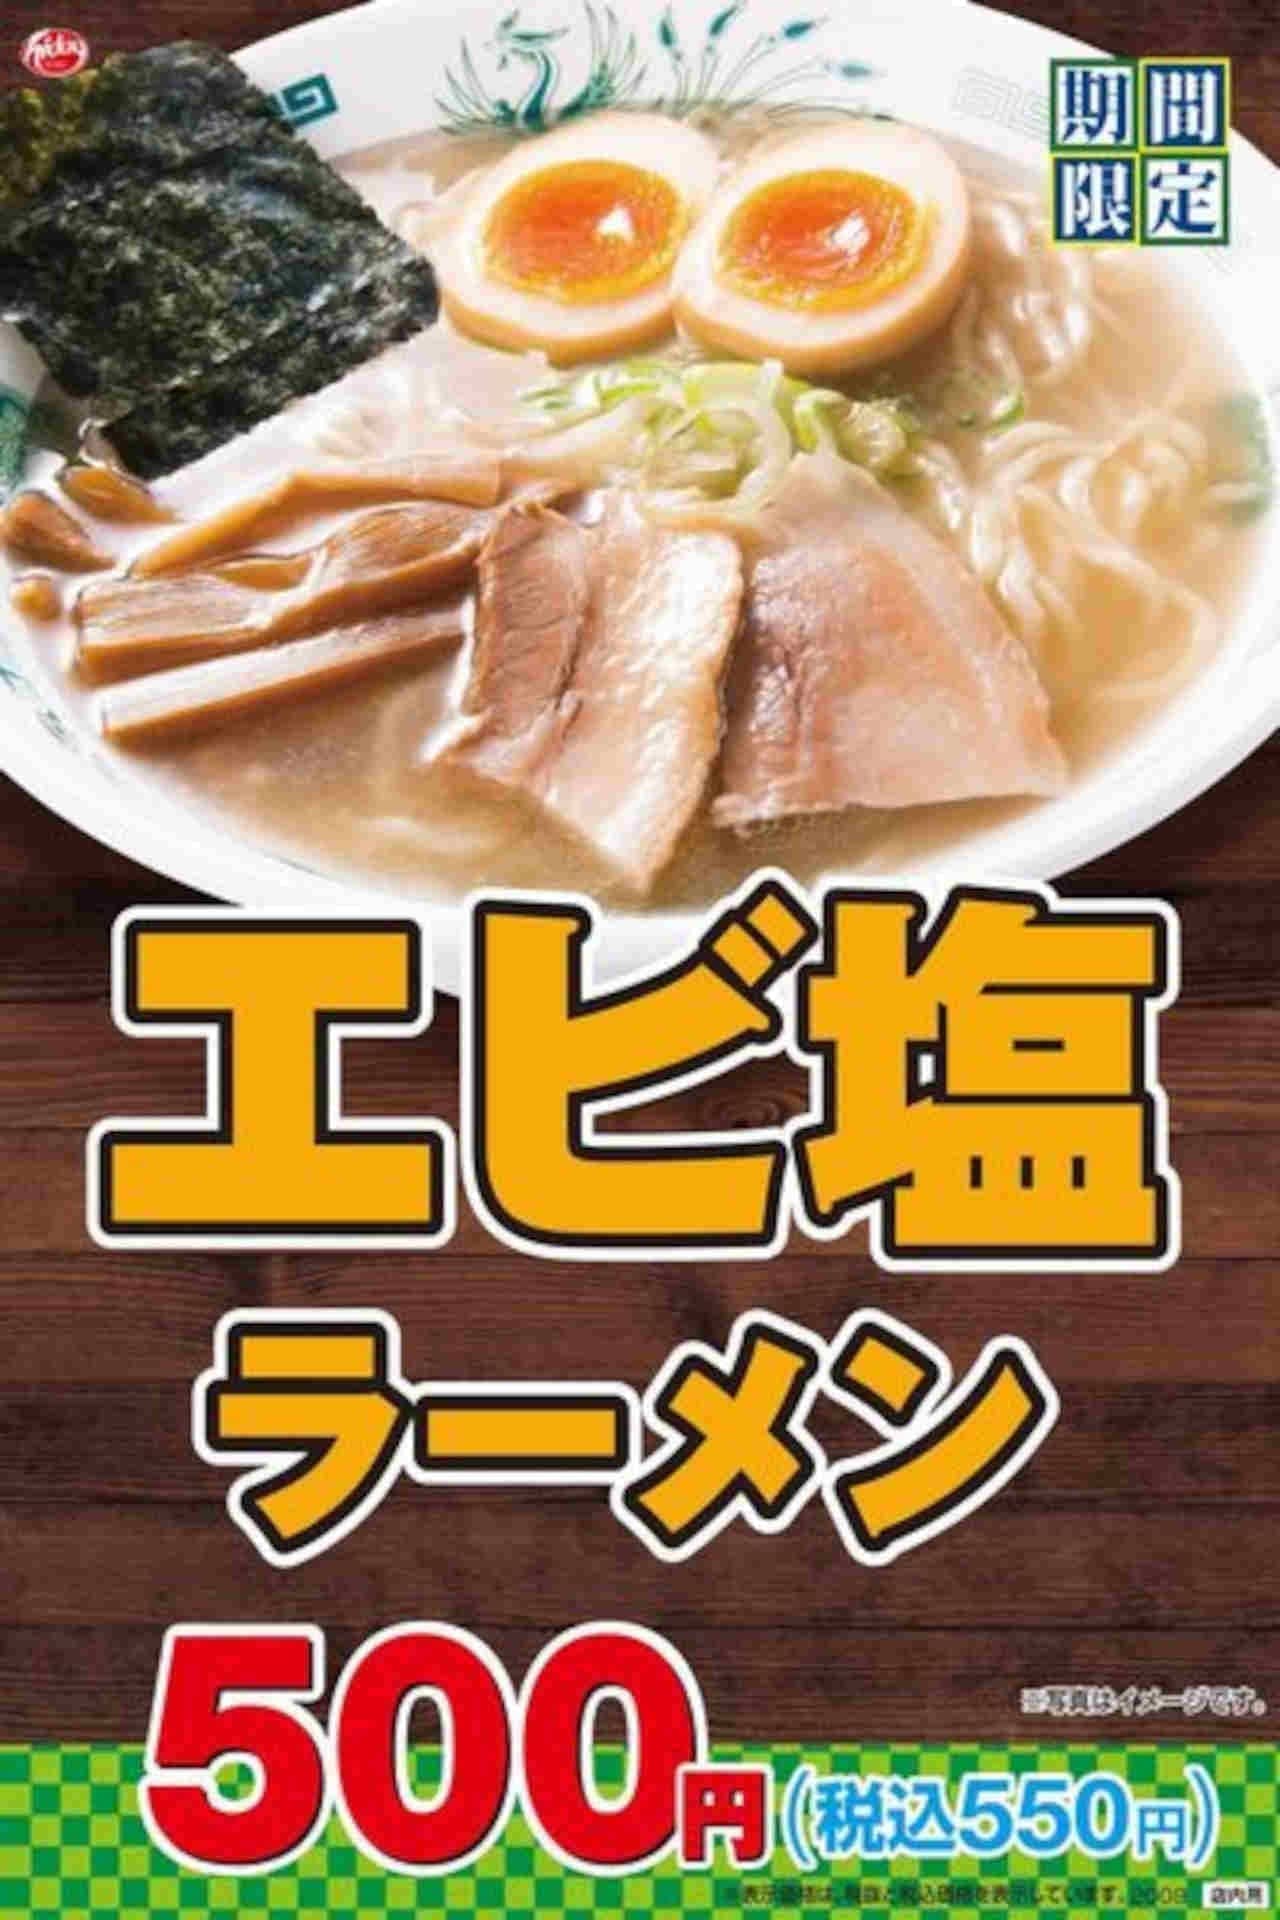 "Shrimp salt ramen" for a limited time at Hidakaya